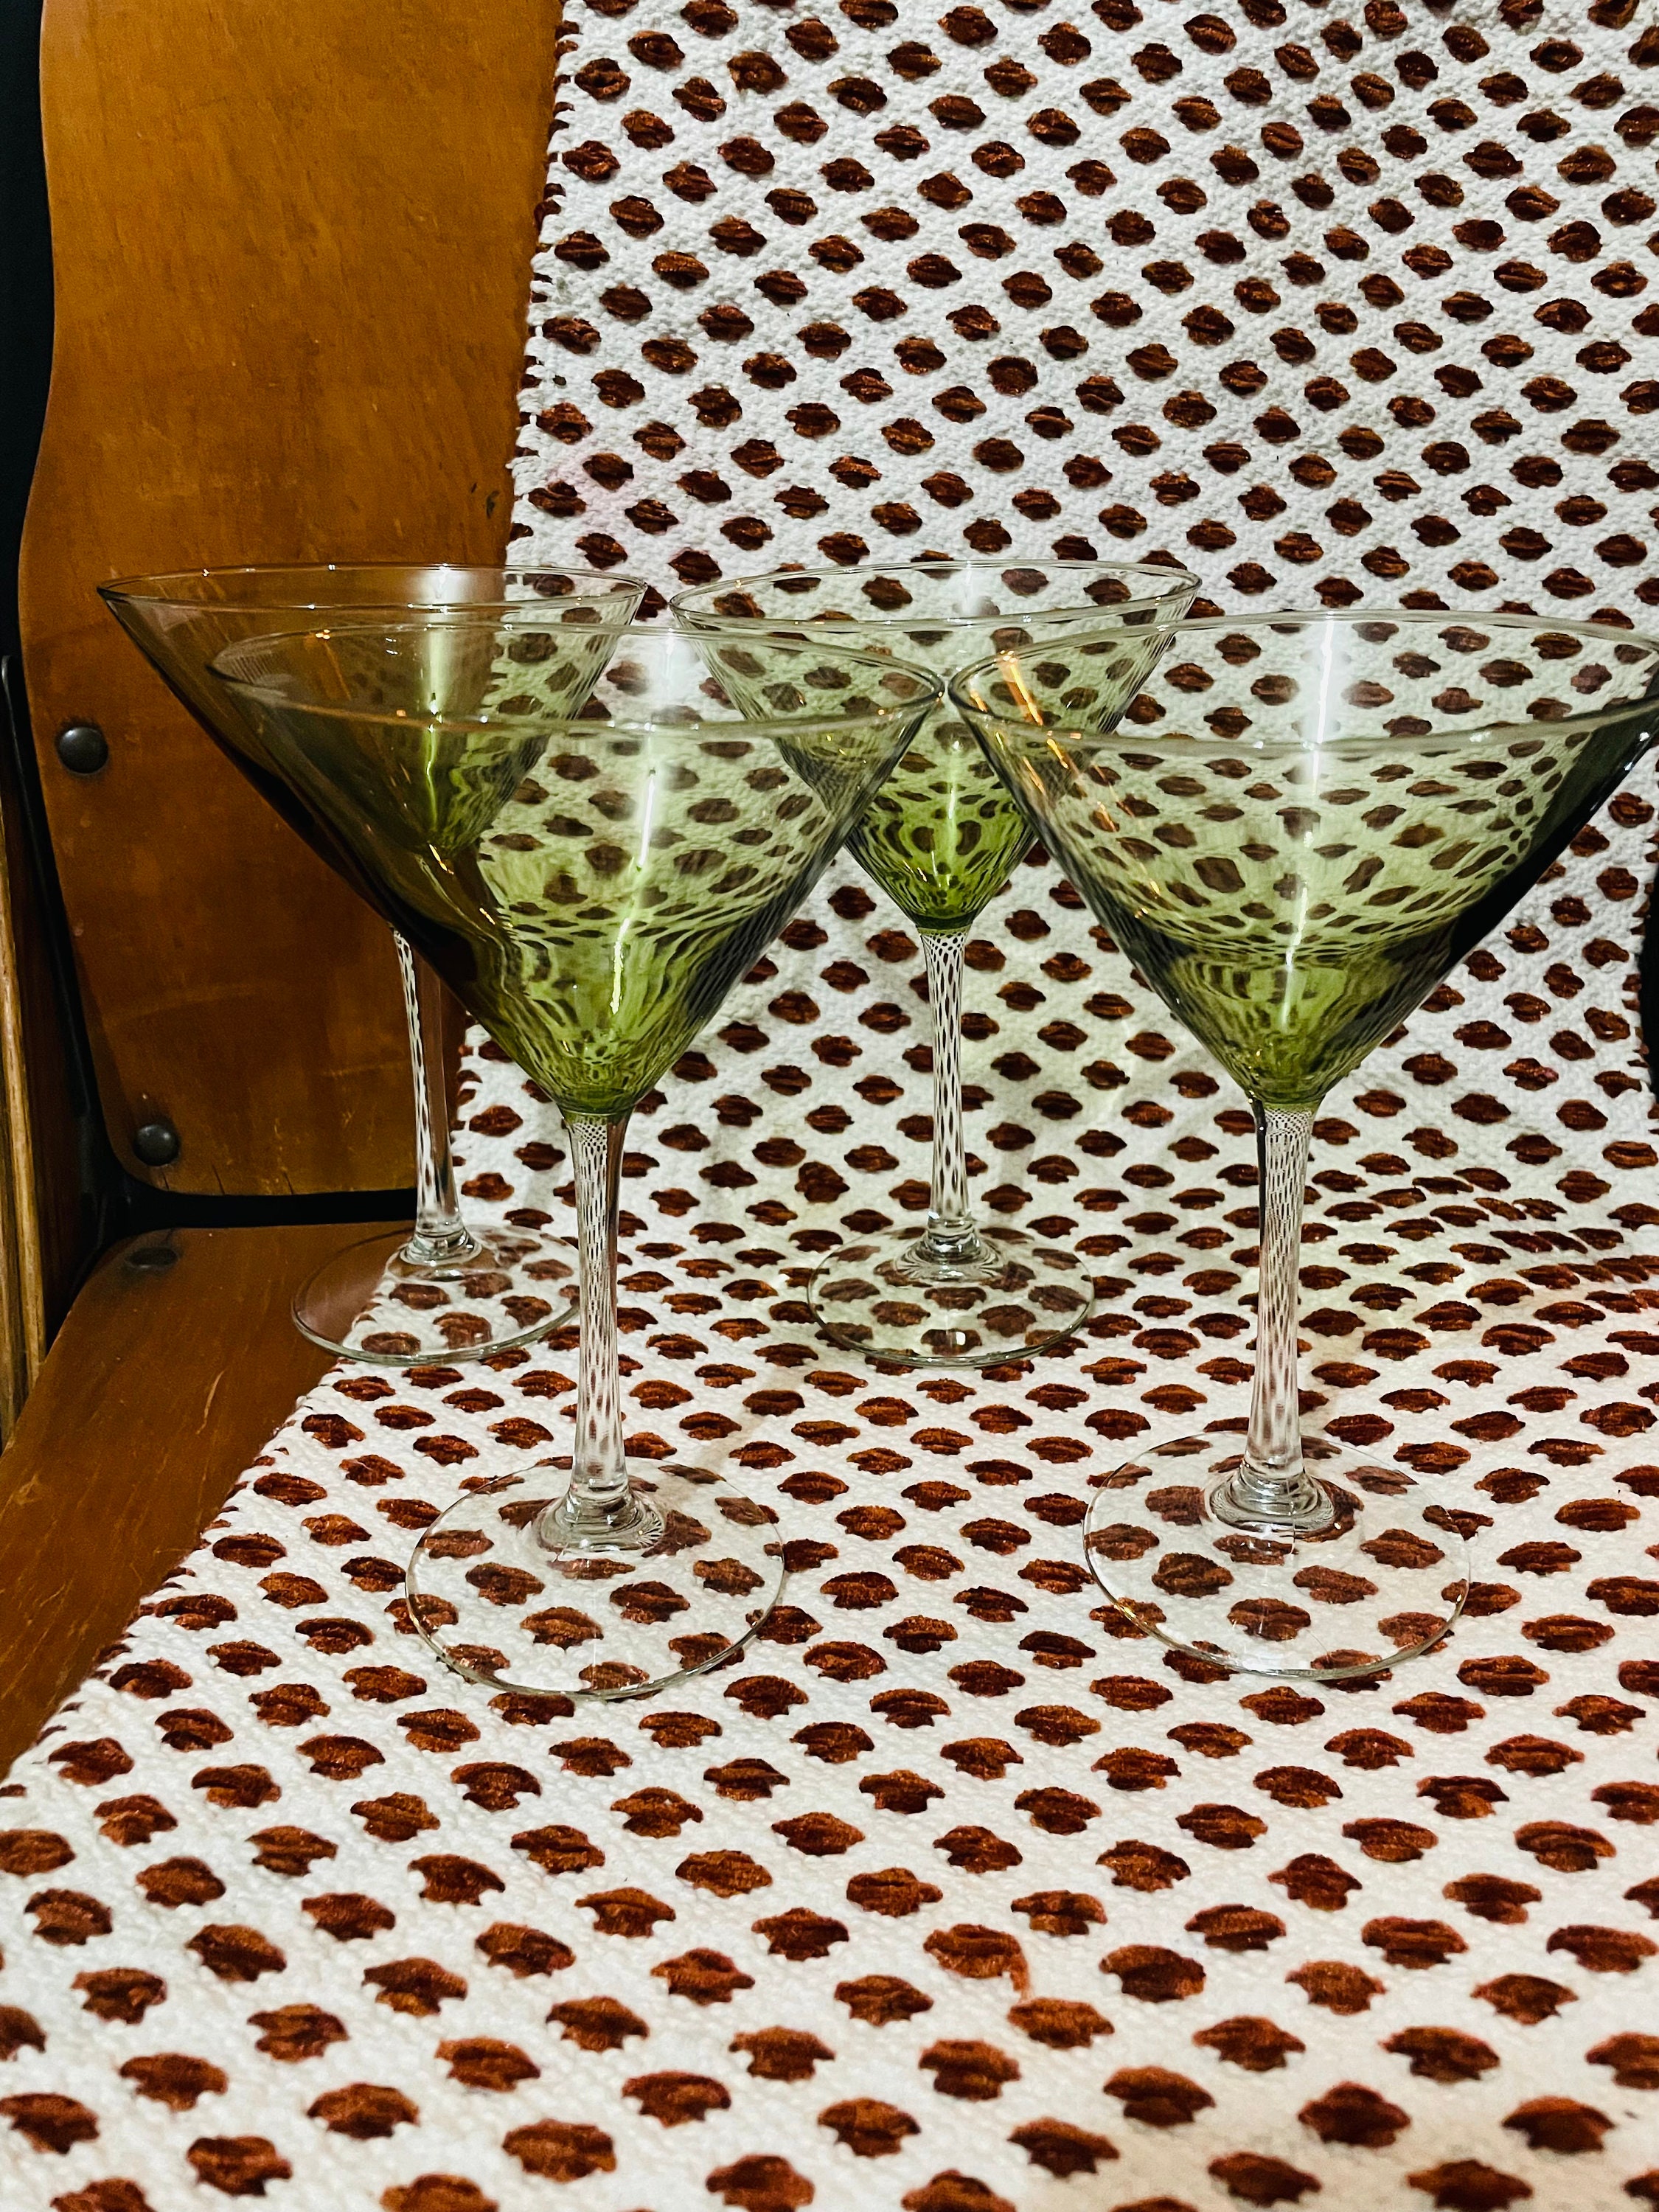 Riedel Personalized Vinum Martini Glass Pair, Set of 2 Custom Engraved Martini  Glasses for Cosmos, Margaritas, Cocktails, Home Bar 4.5oz 